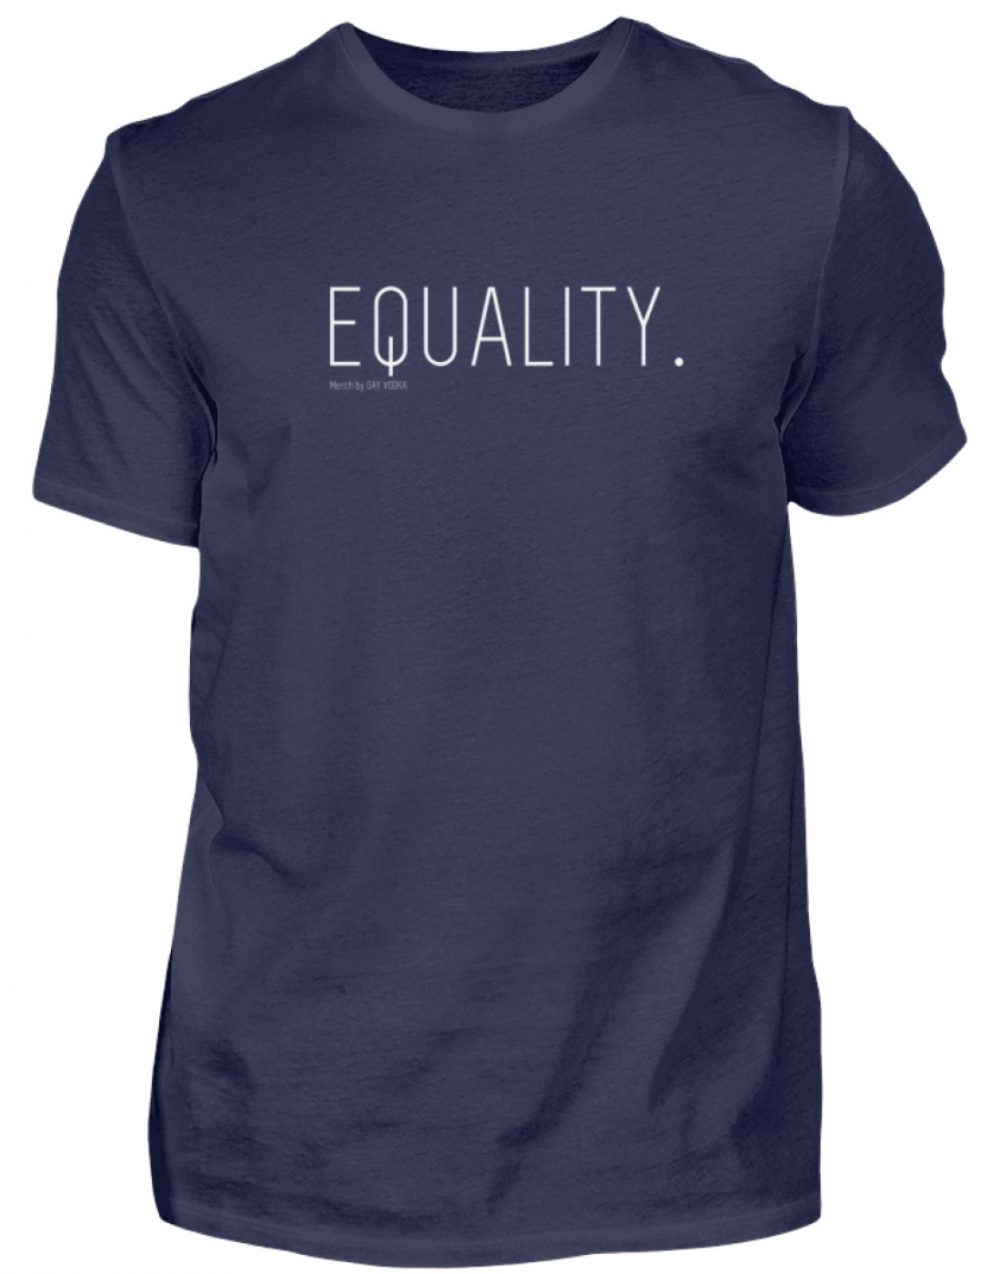 EQUALITY. - Herren Premiumshirt-198